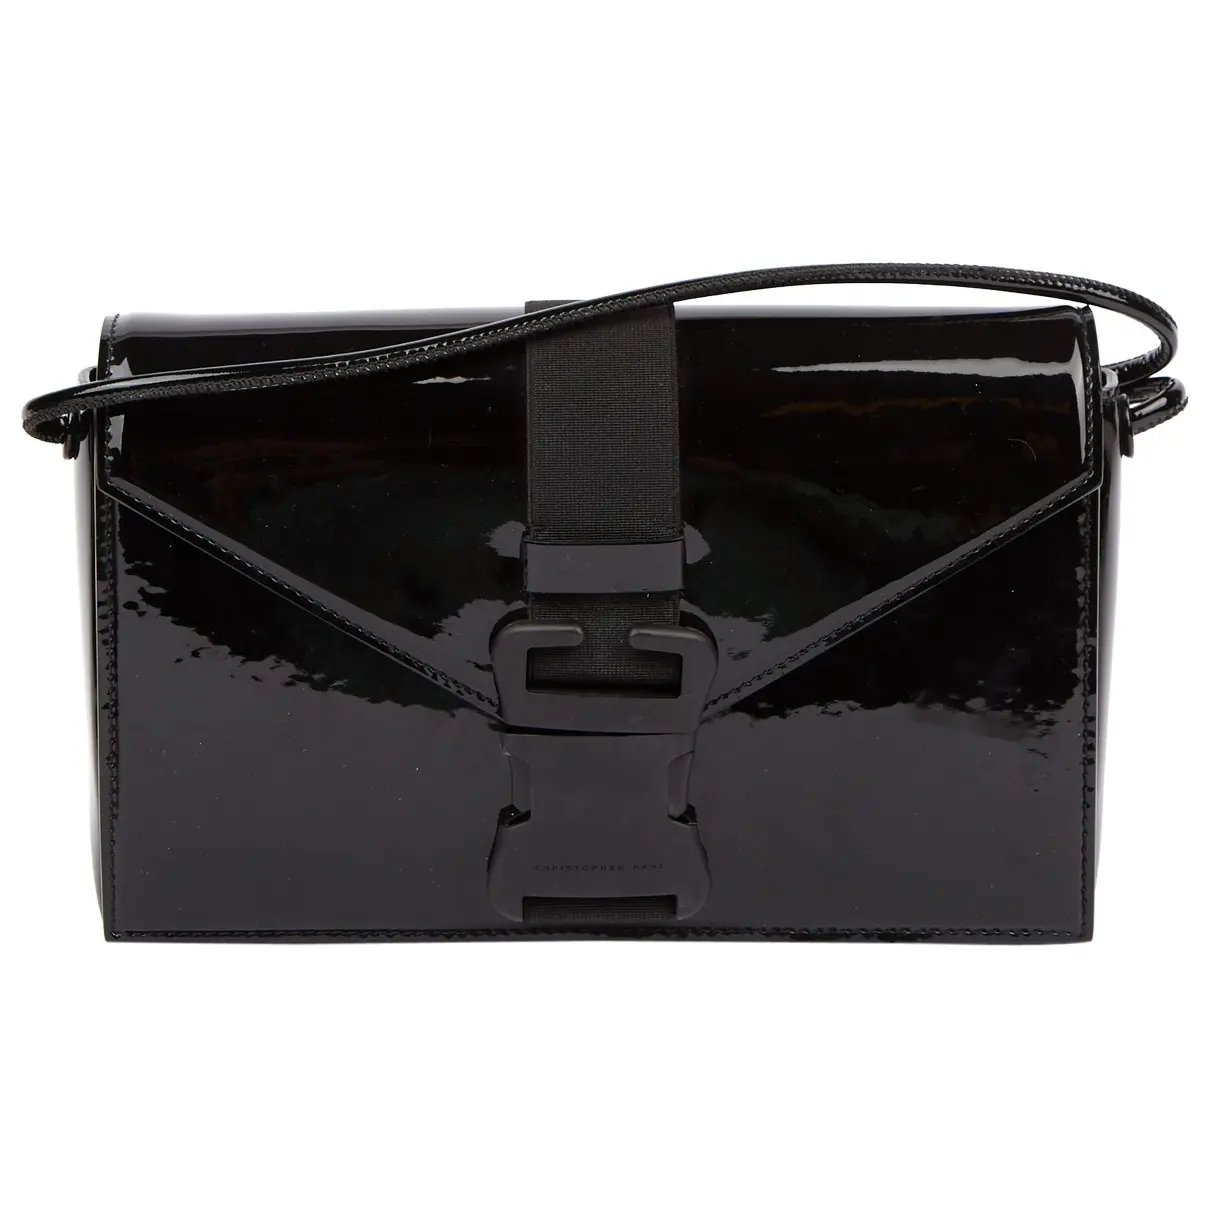 Patent leather handbag Christopher Kane